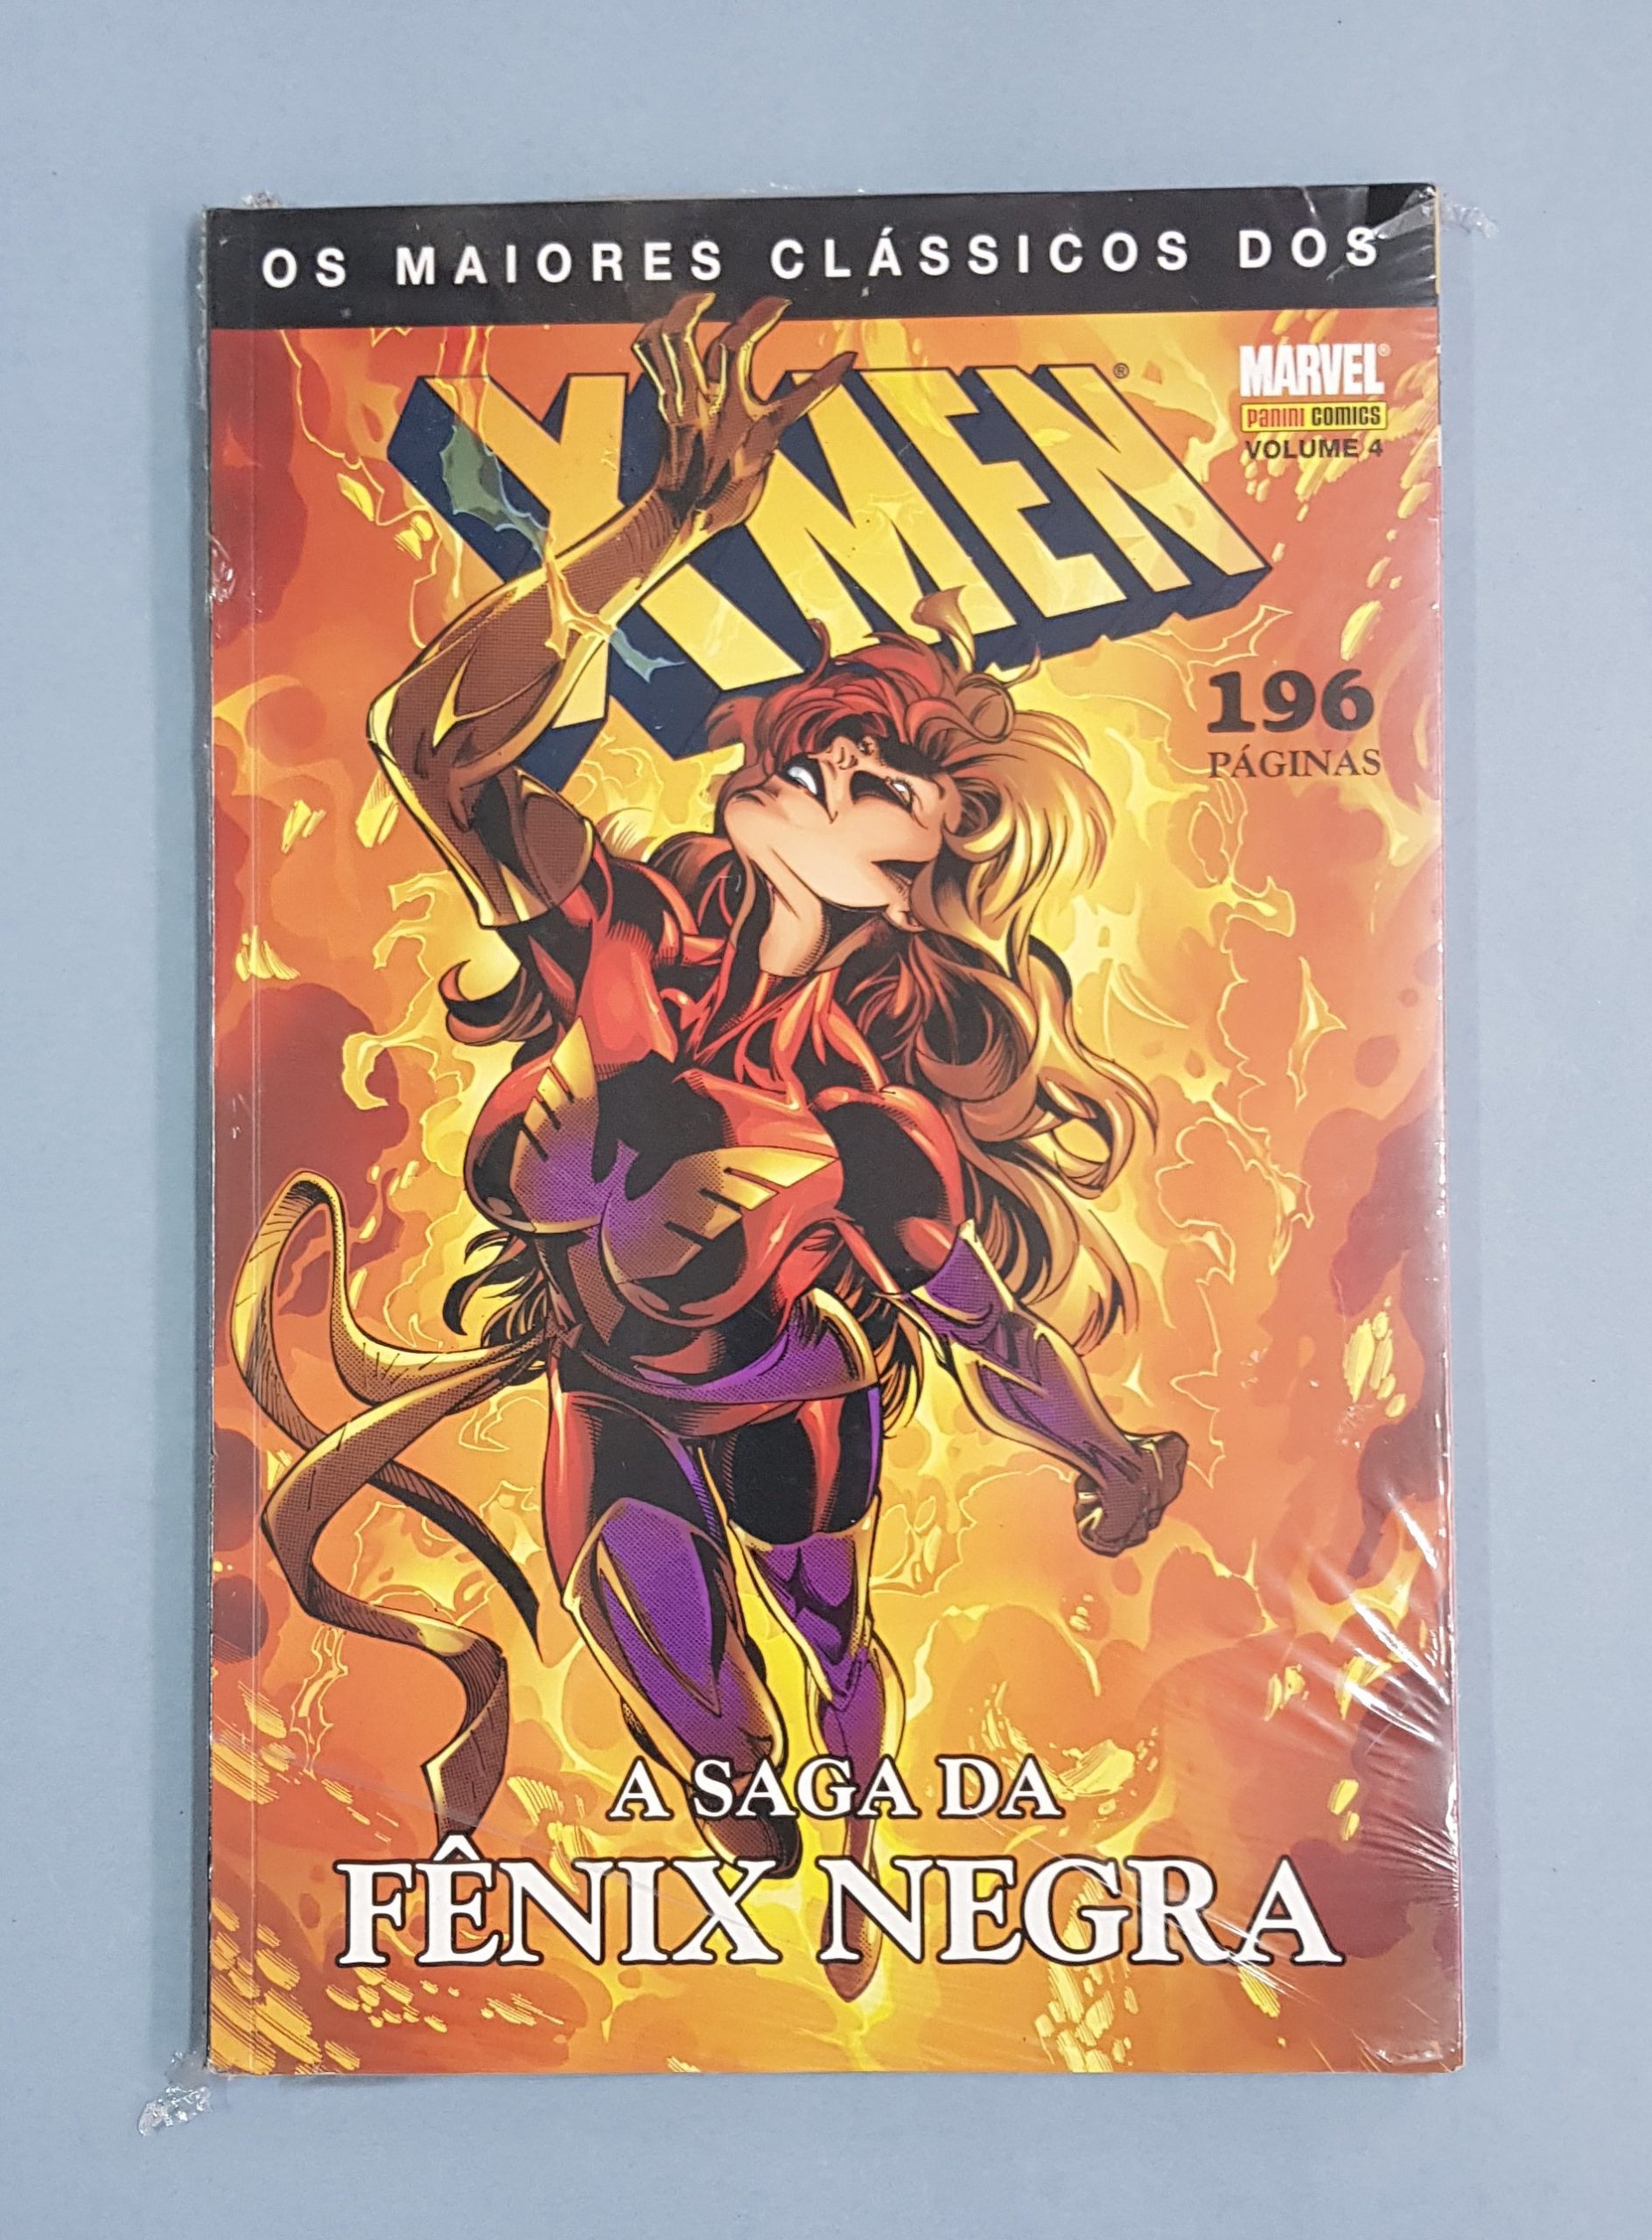 XMEN VOLUME 4 – A SAGA DA FÊNIX NEGRA